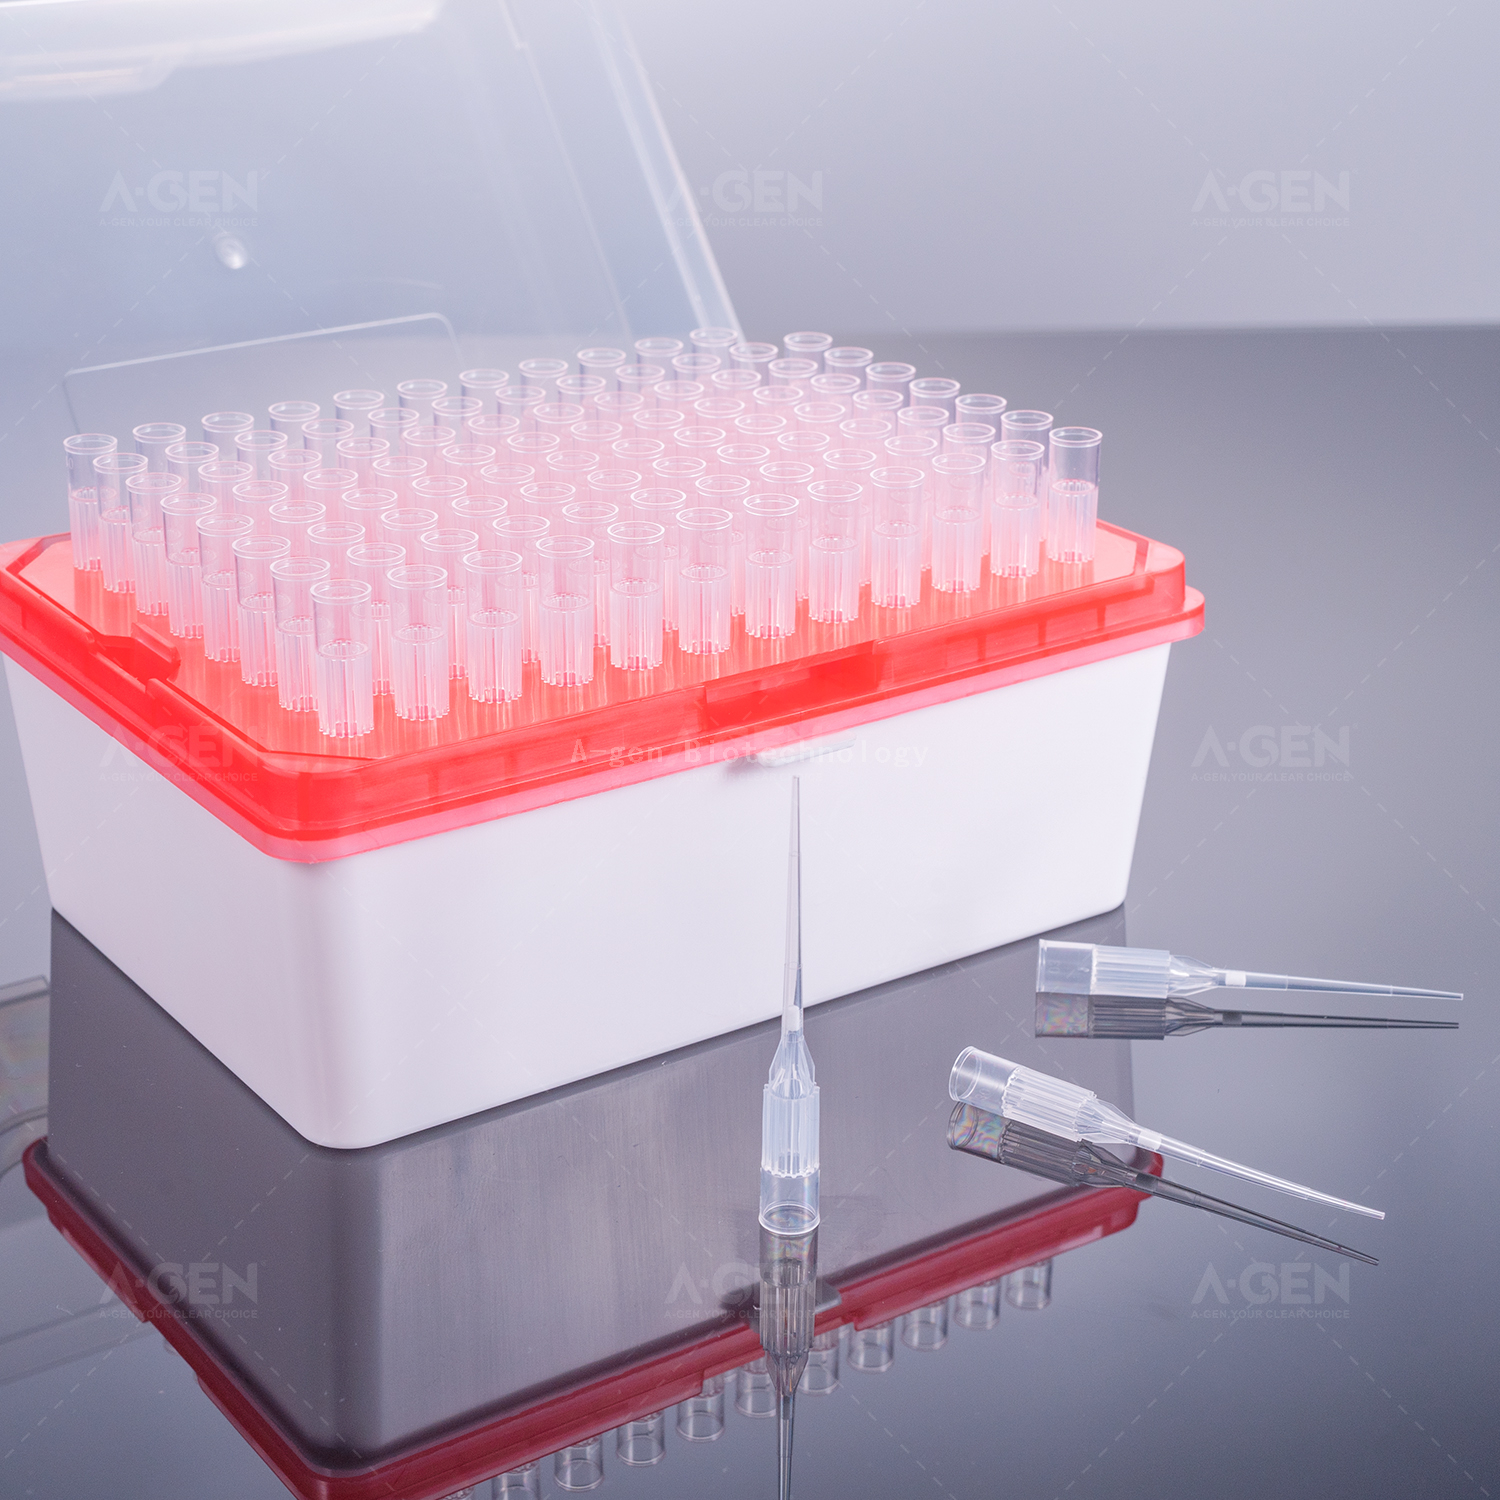 Sterilization Rainin 20uL Filter Tip Packed in Rack 